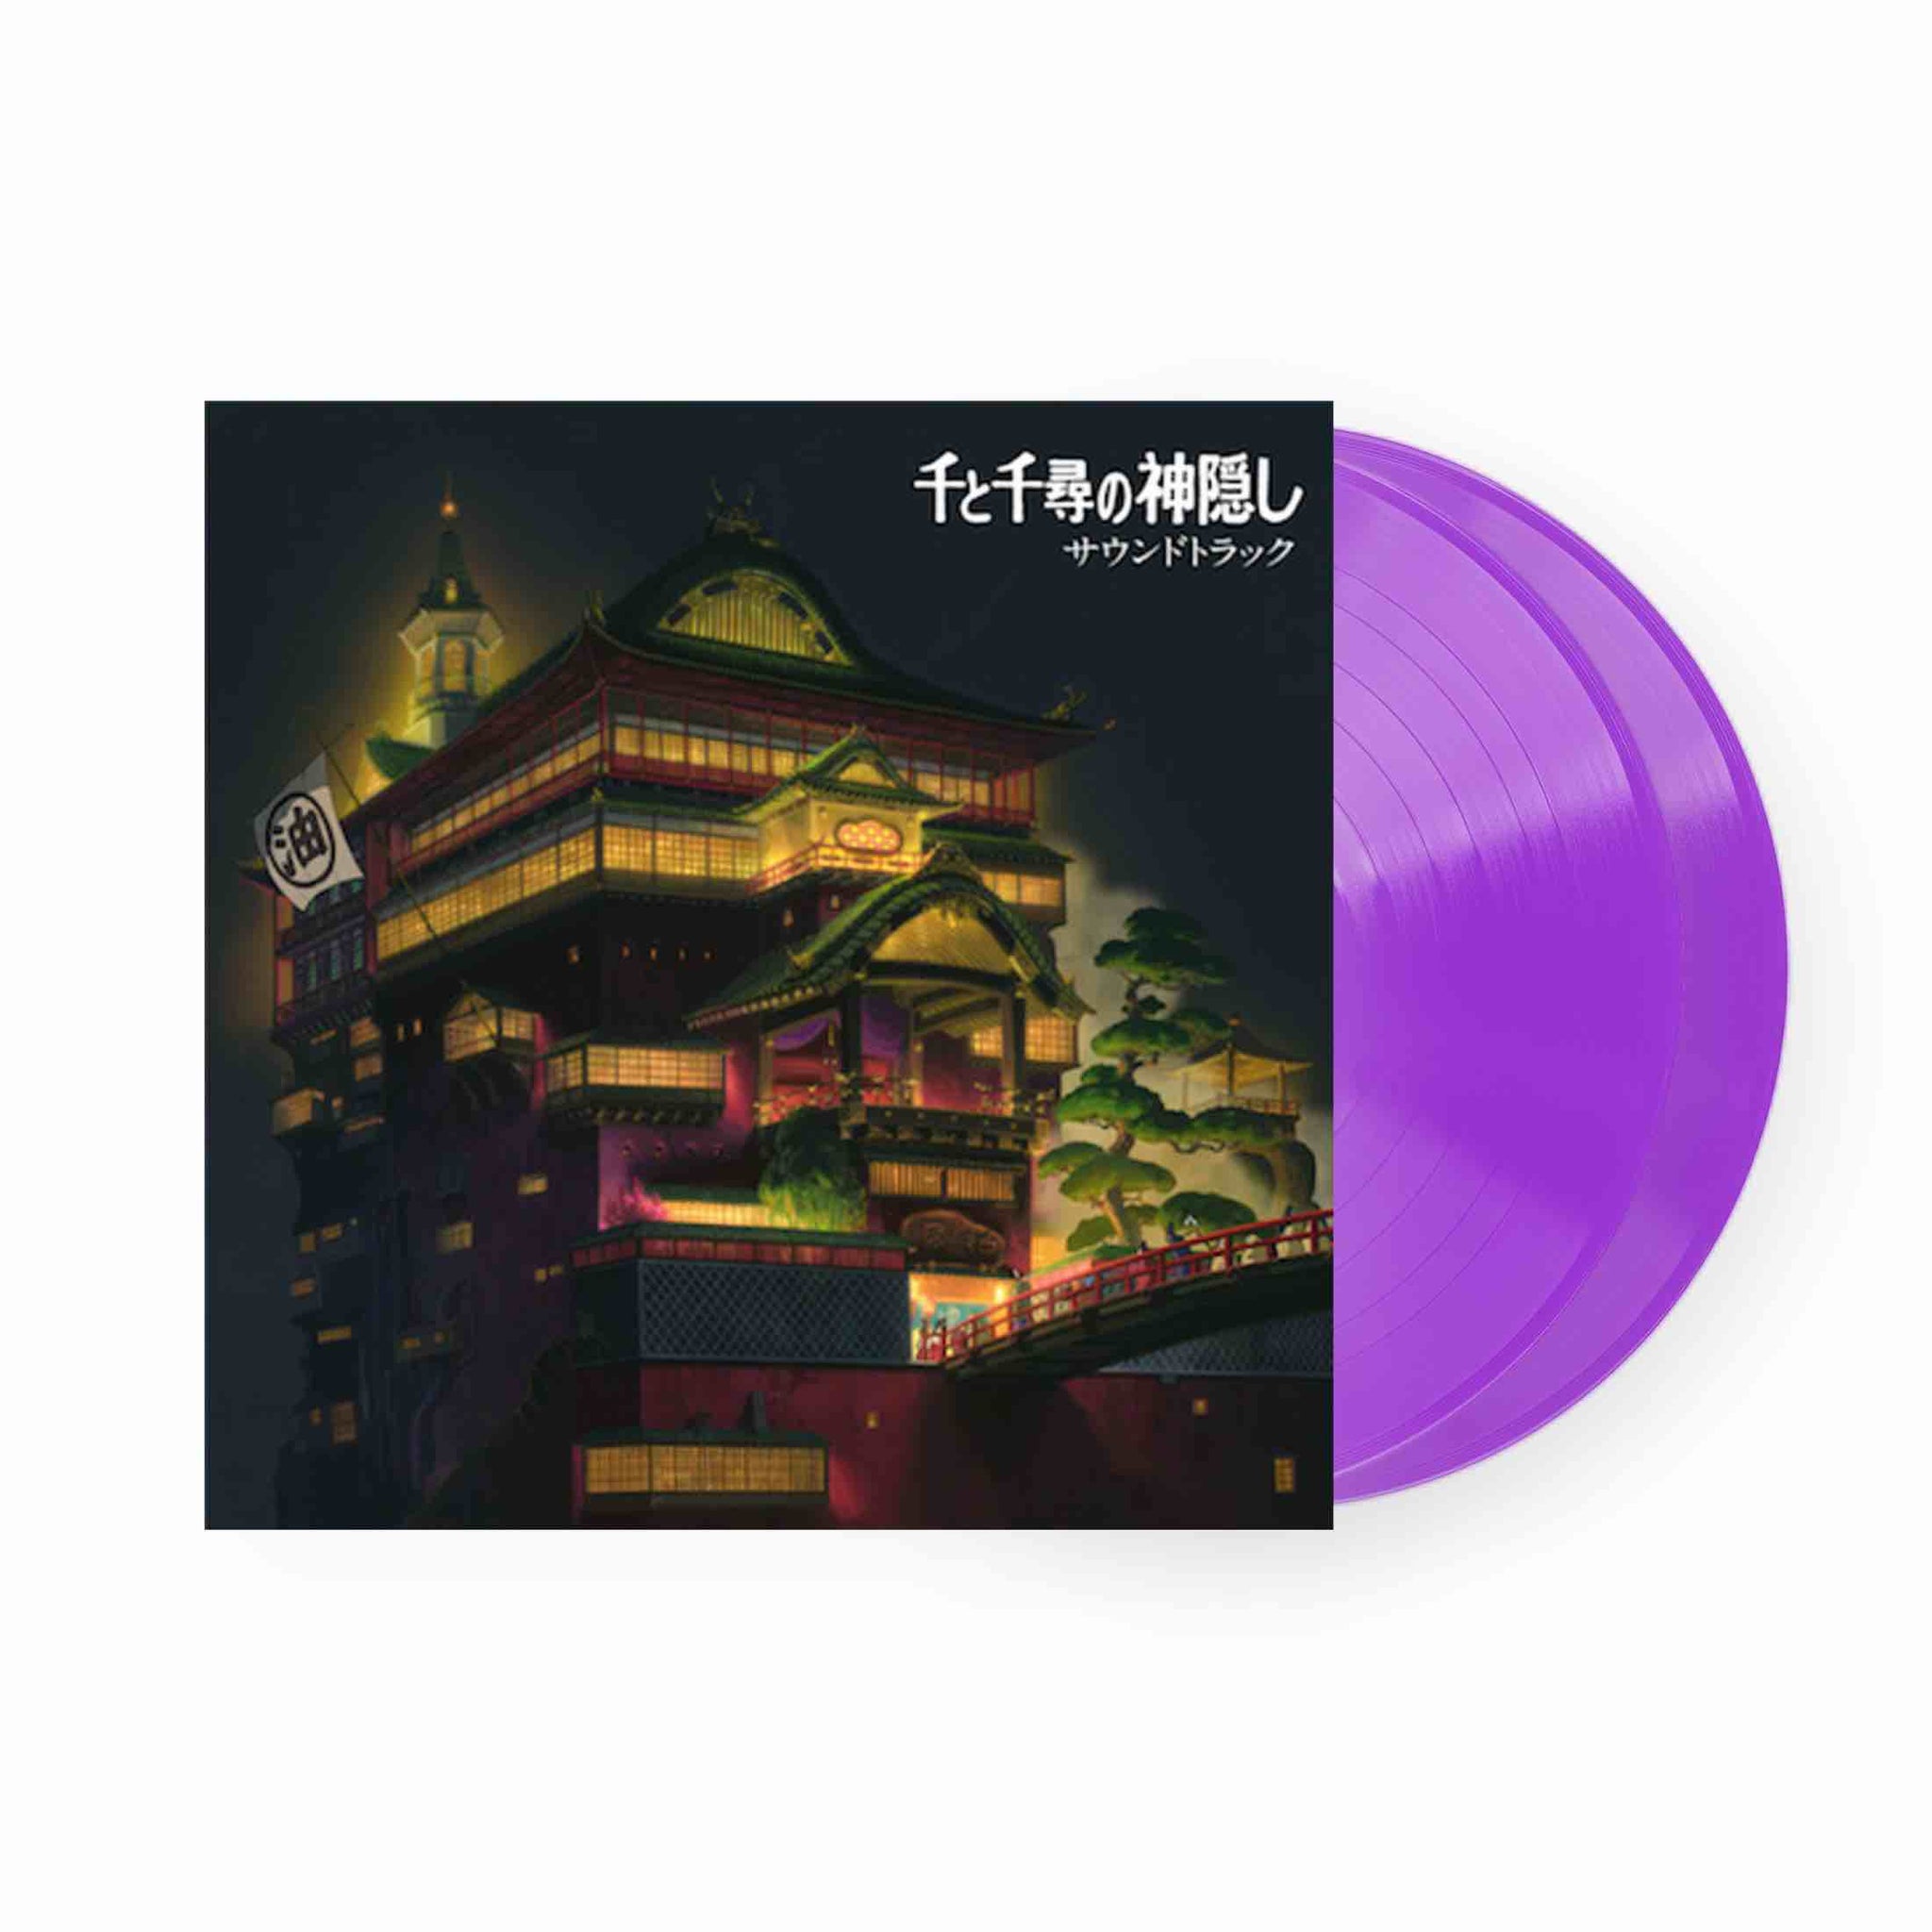 Spirited Away - Original Soundtrack 2xLP (Purple Vinyl) – Plastic 